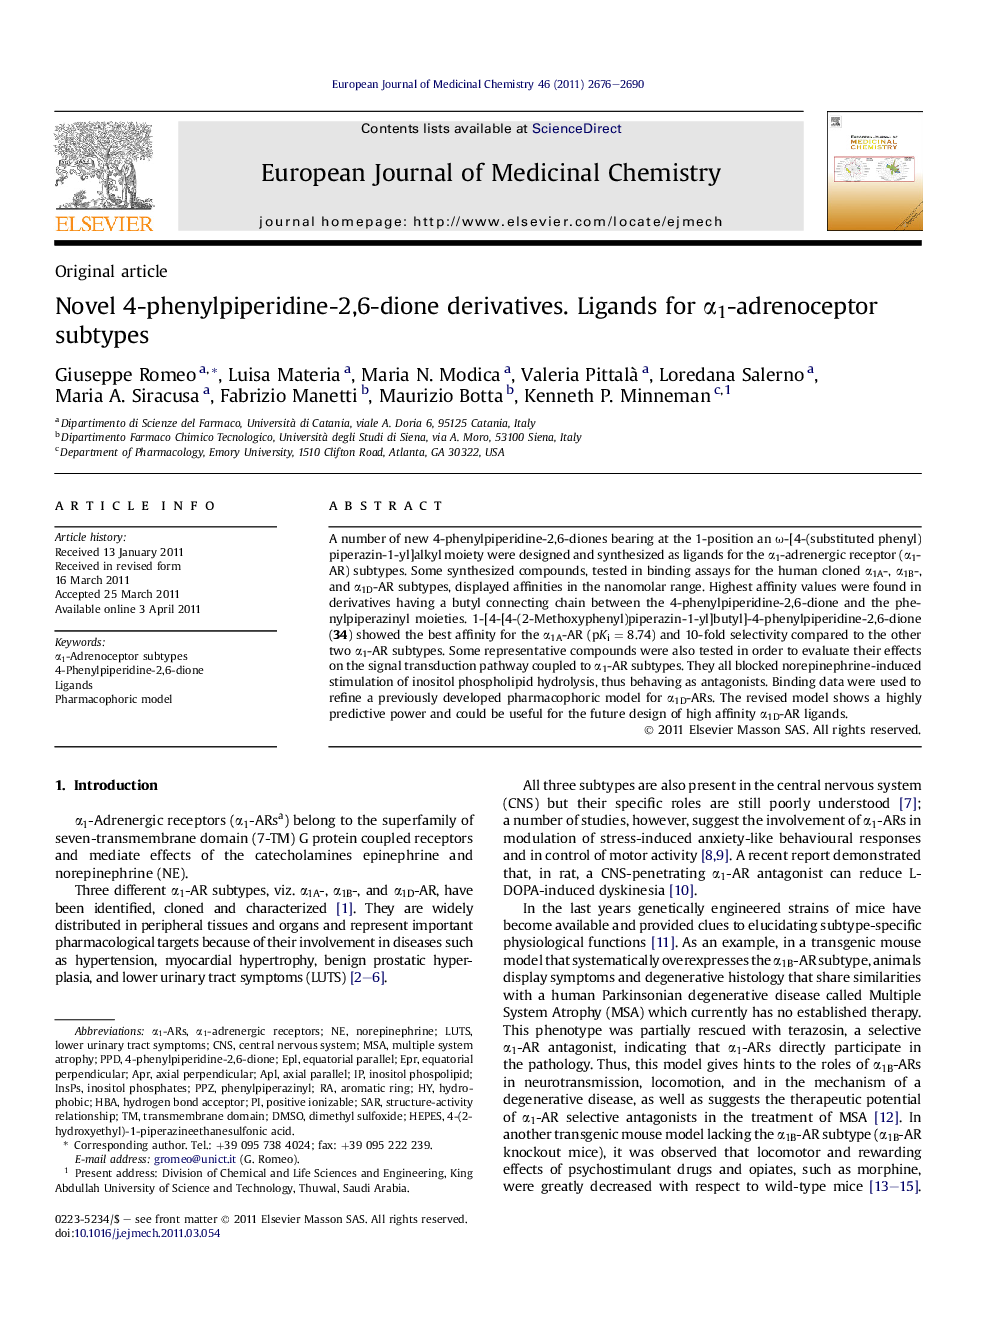 Novel 4-phenylpiperidine-2,6-dione derivatives. Ligands for α1-adrenoceptor subtypes